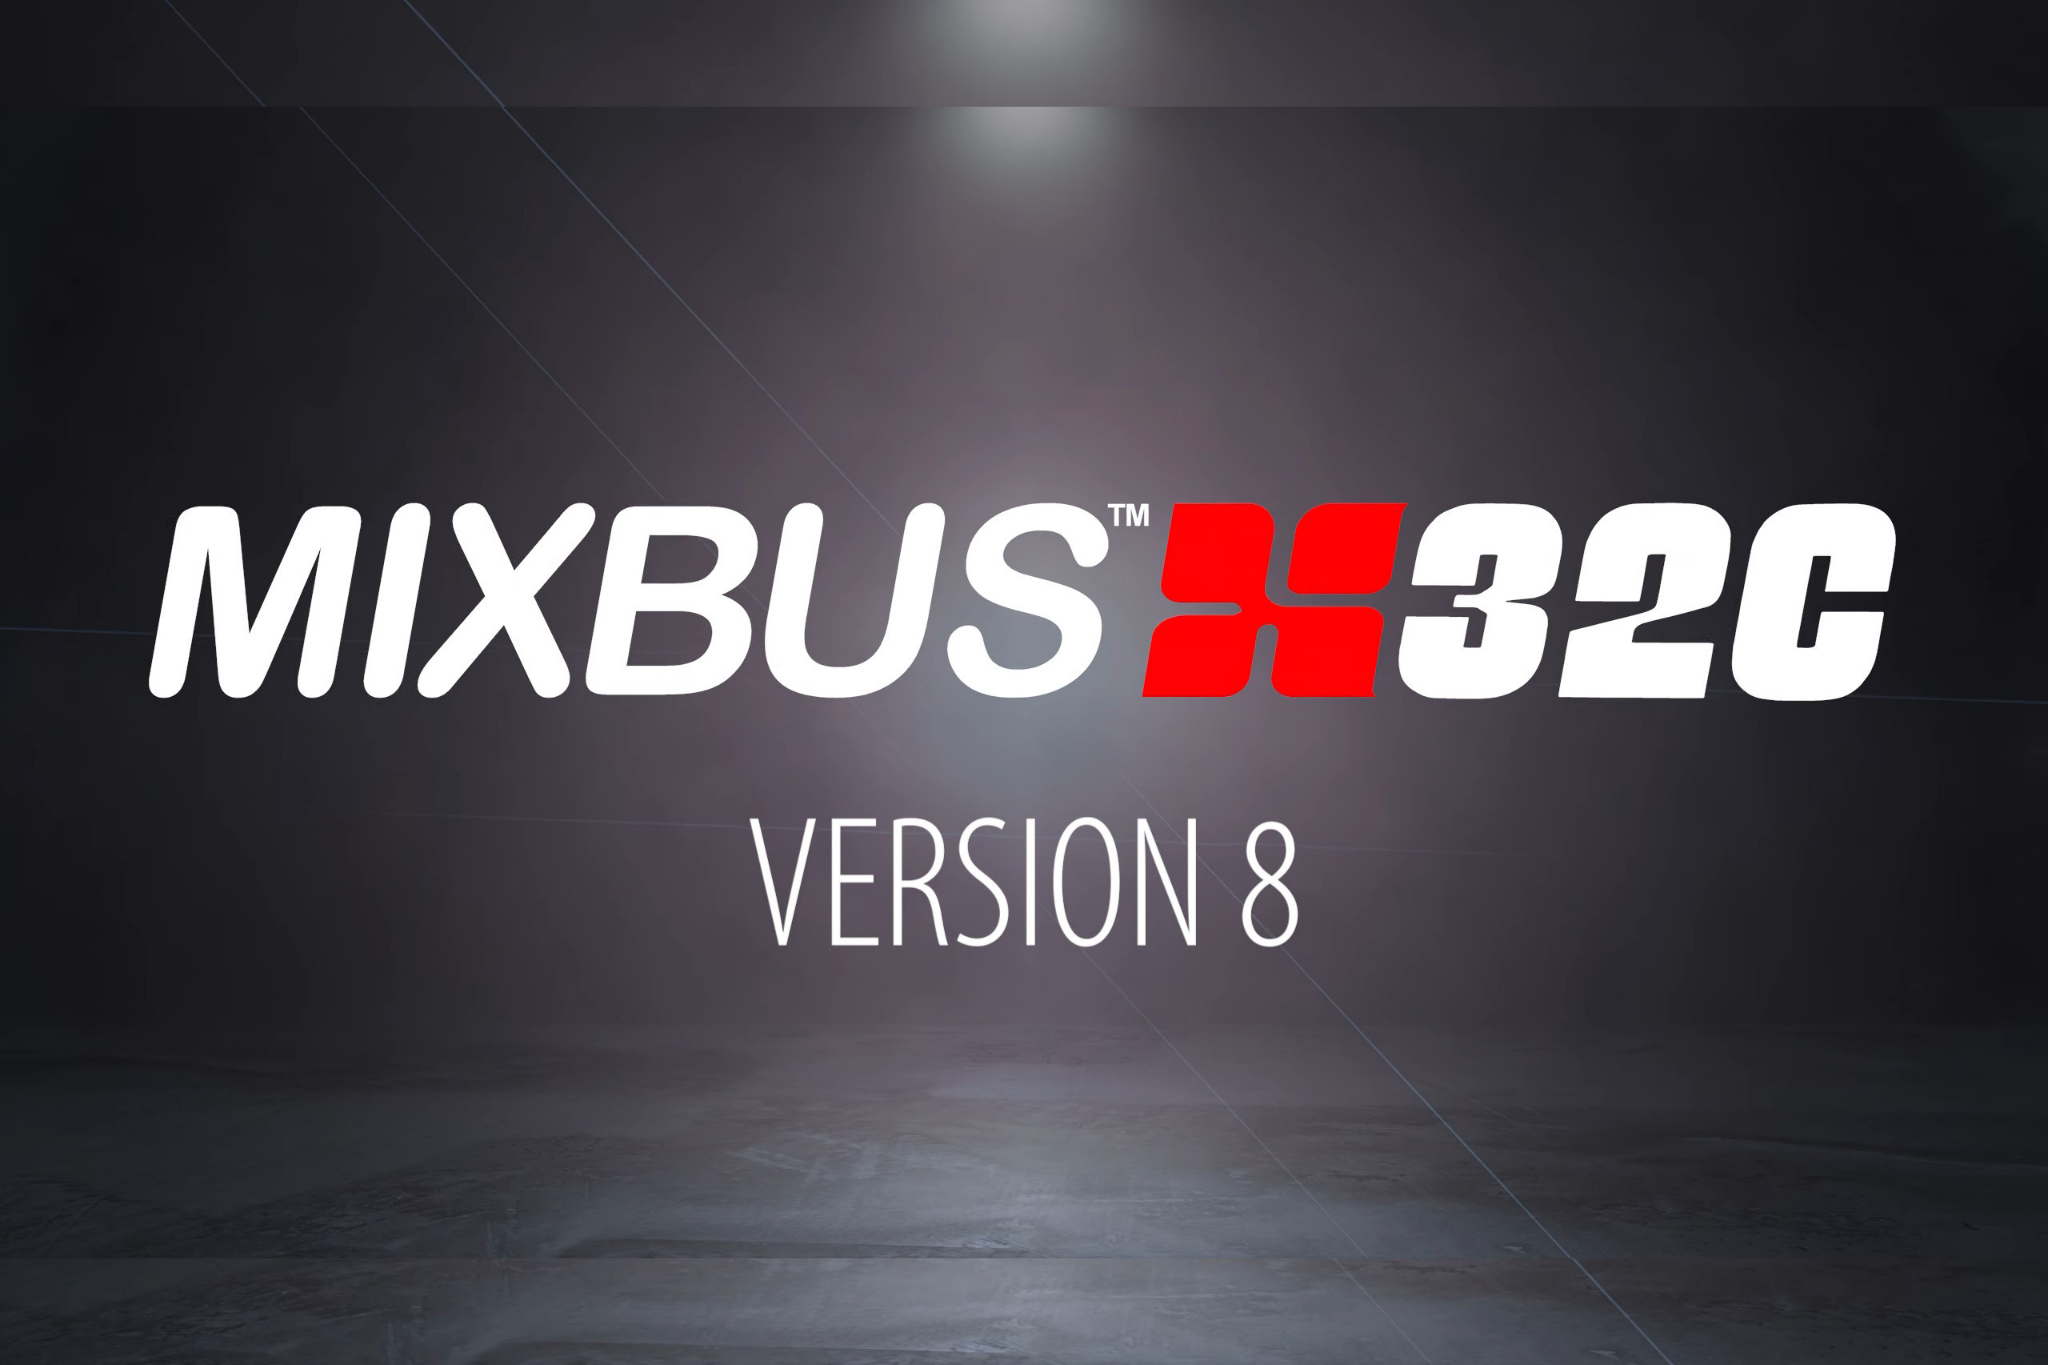 mixbus32c v8